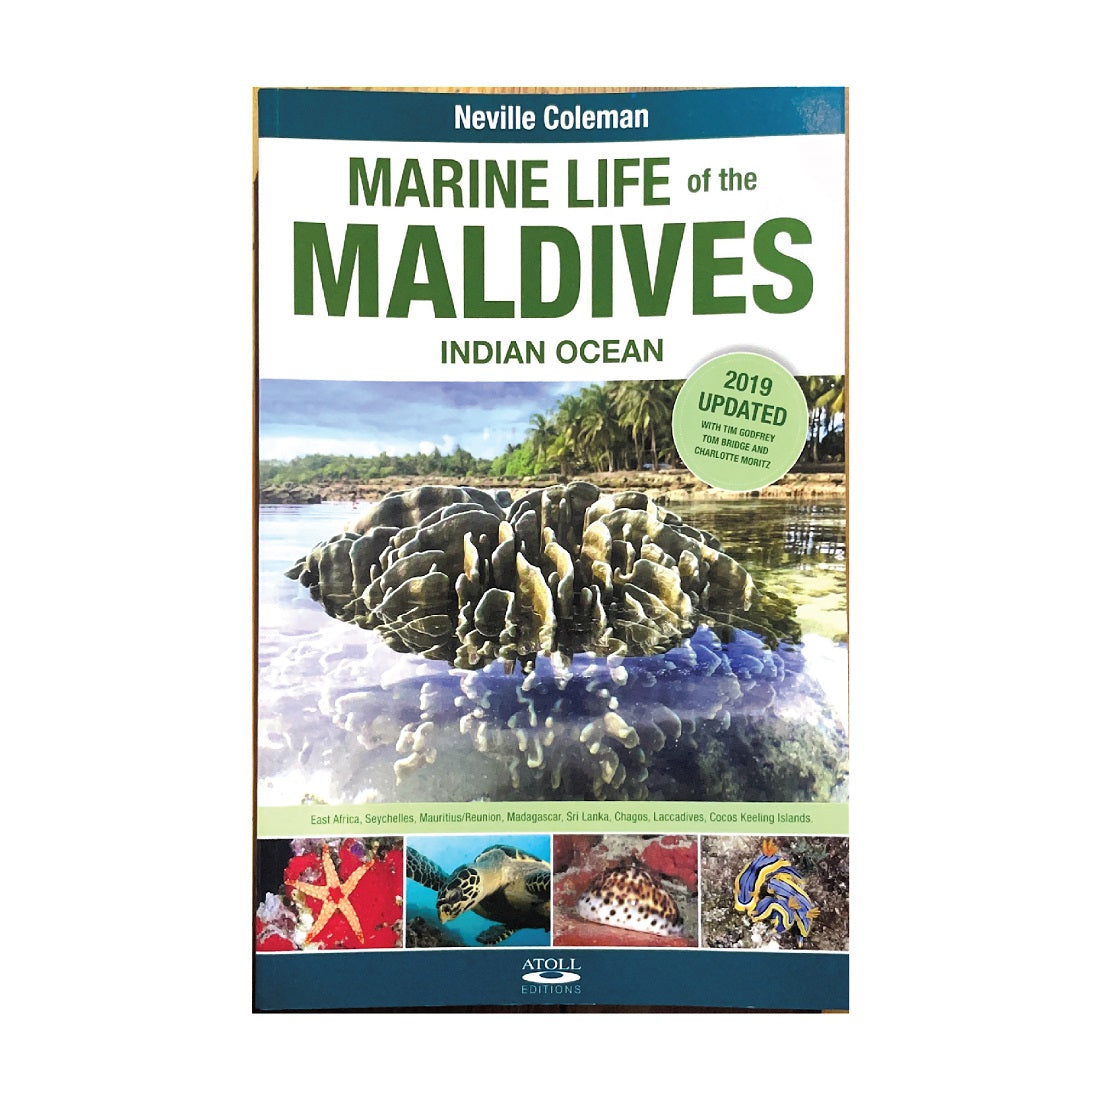 MARINE LIFE OF THE MALDIVES 2019 Edition